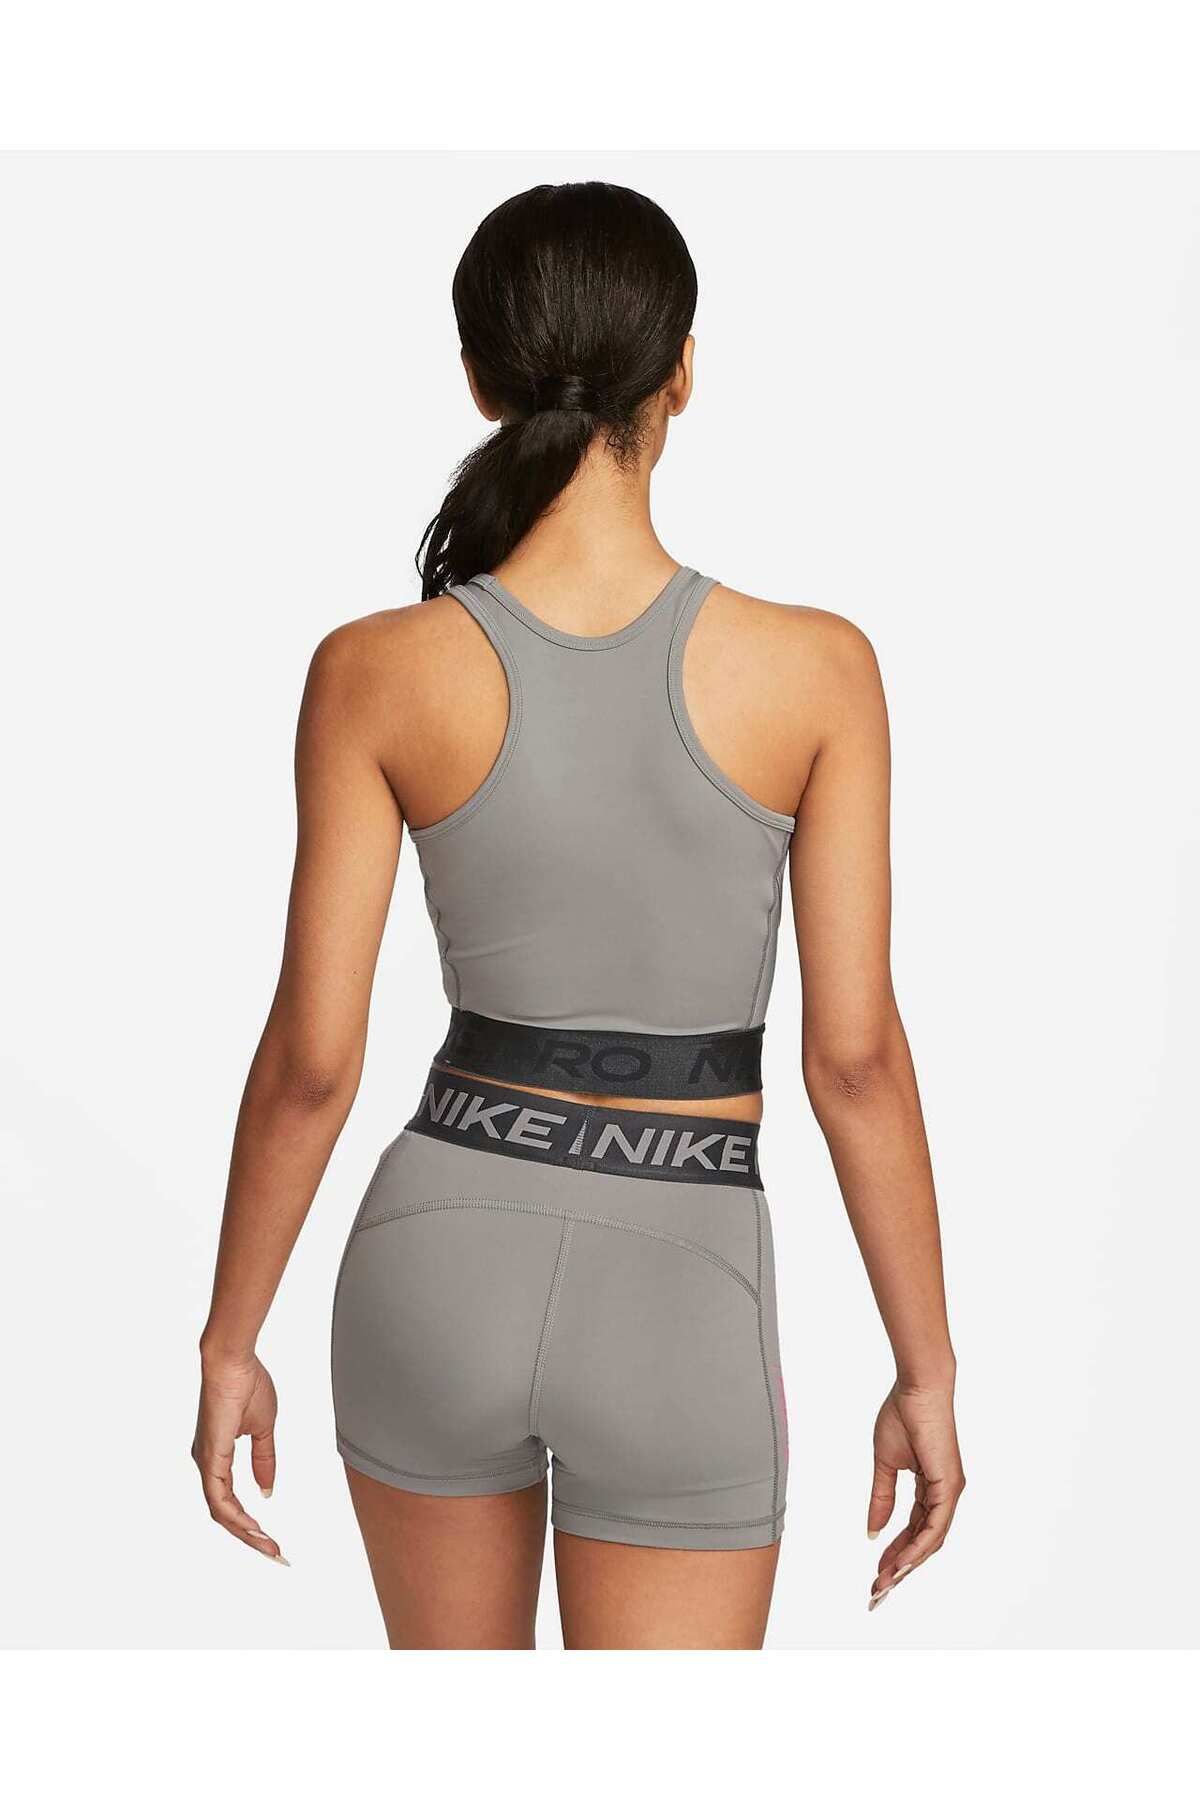 Nike Yoga Luxe Infalon Dri-fit Shelf-bra Tank Da0723-369 - Trendyol